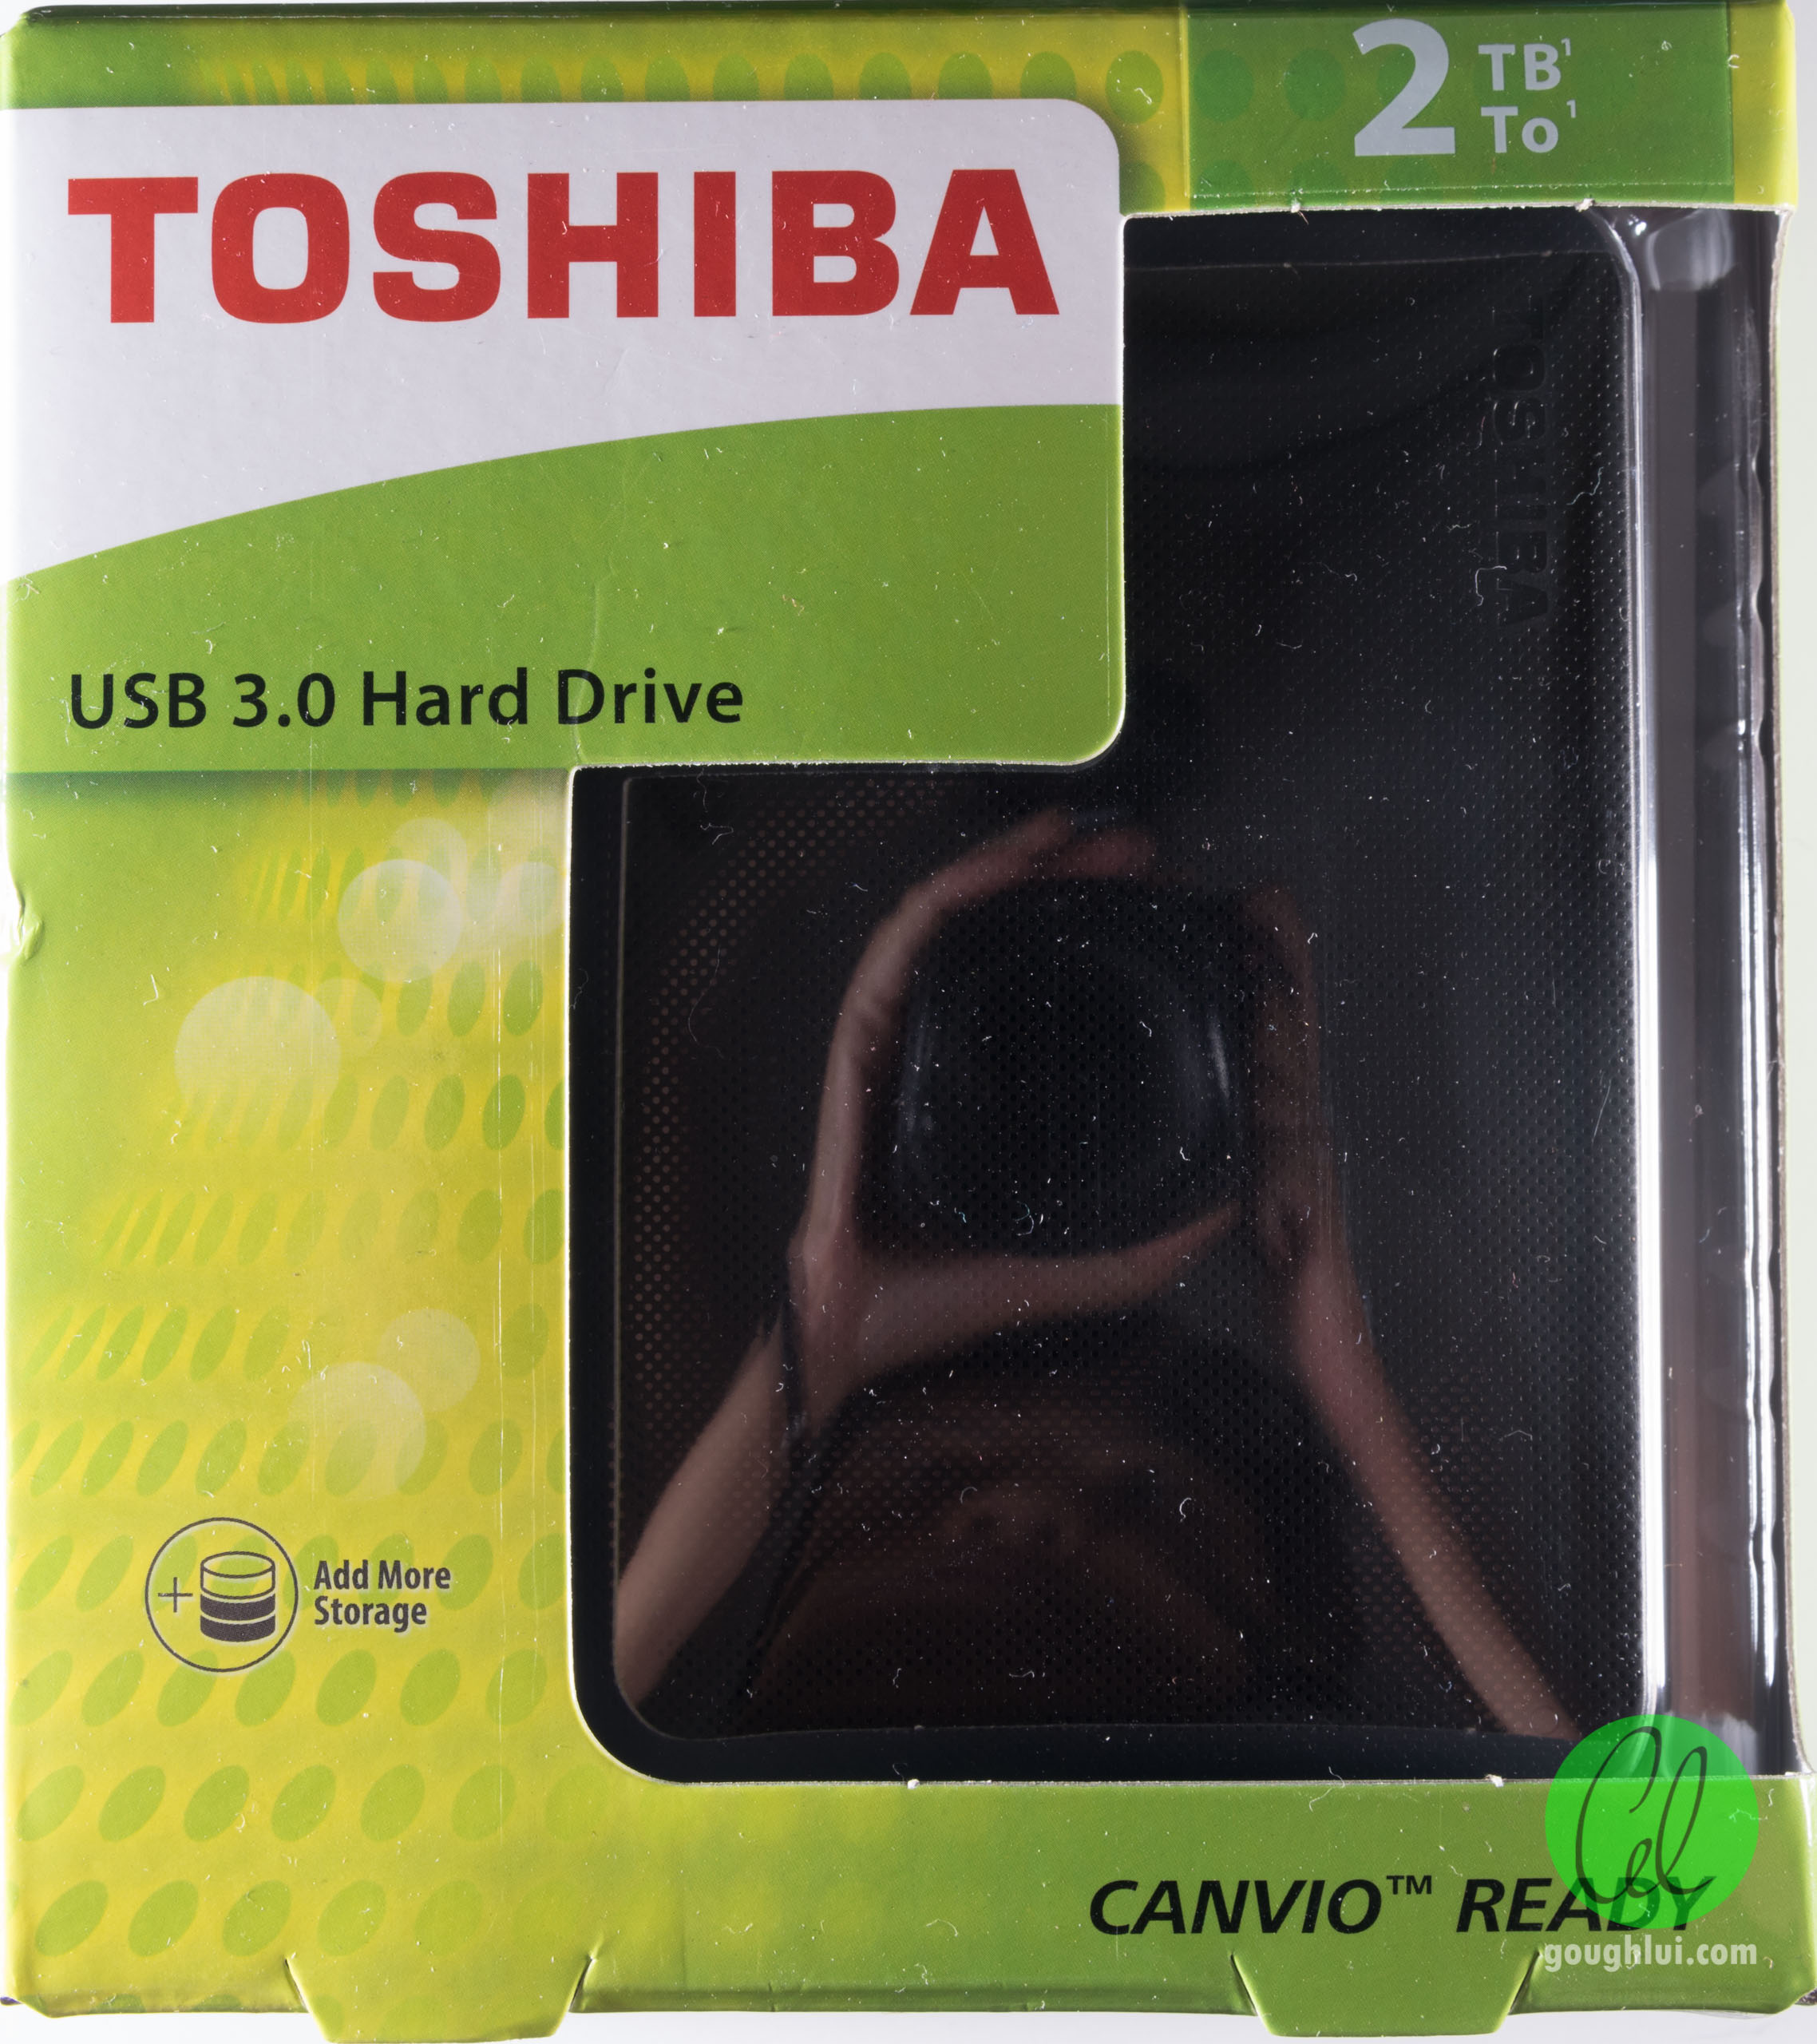 toshiba external usb 3.0 driver